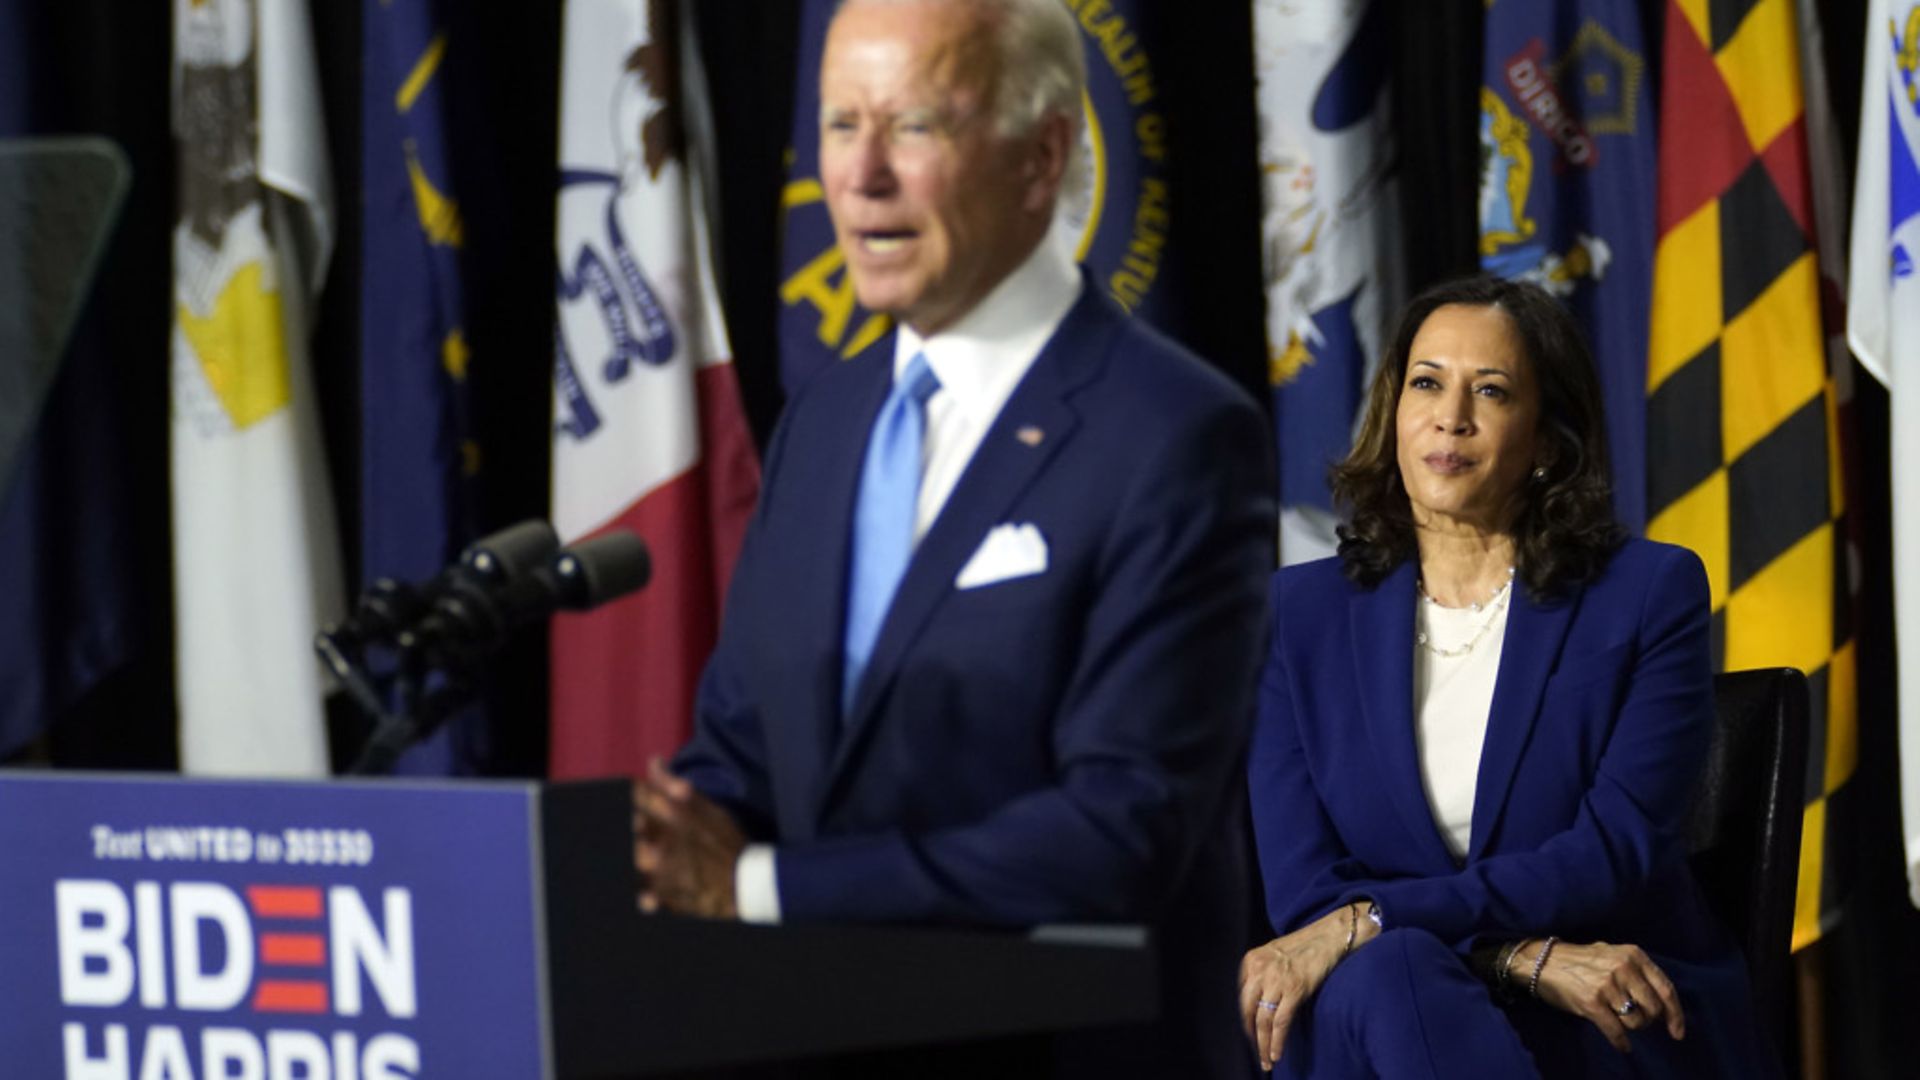 Joe Biden speaks during a campaign event with Kamala Harris - Credit: AP